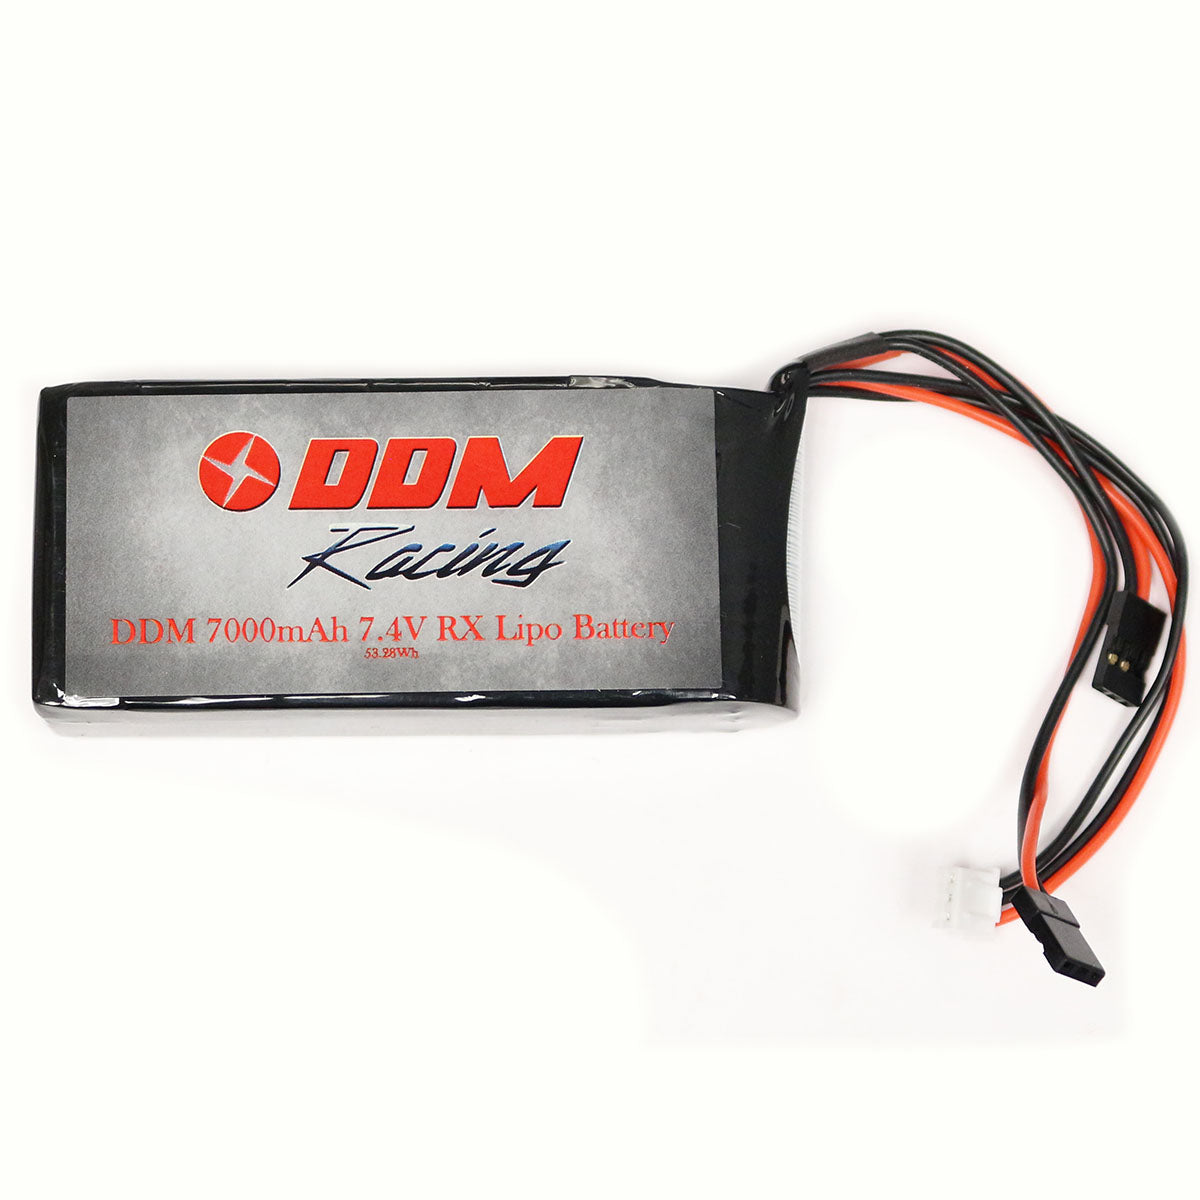 DDM Racing 7.4v 7000mAh LiPo RX Paquete de batería - bt285